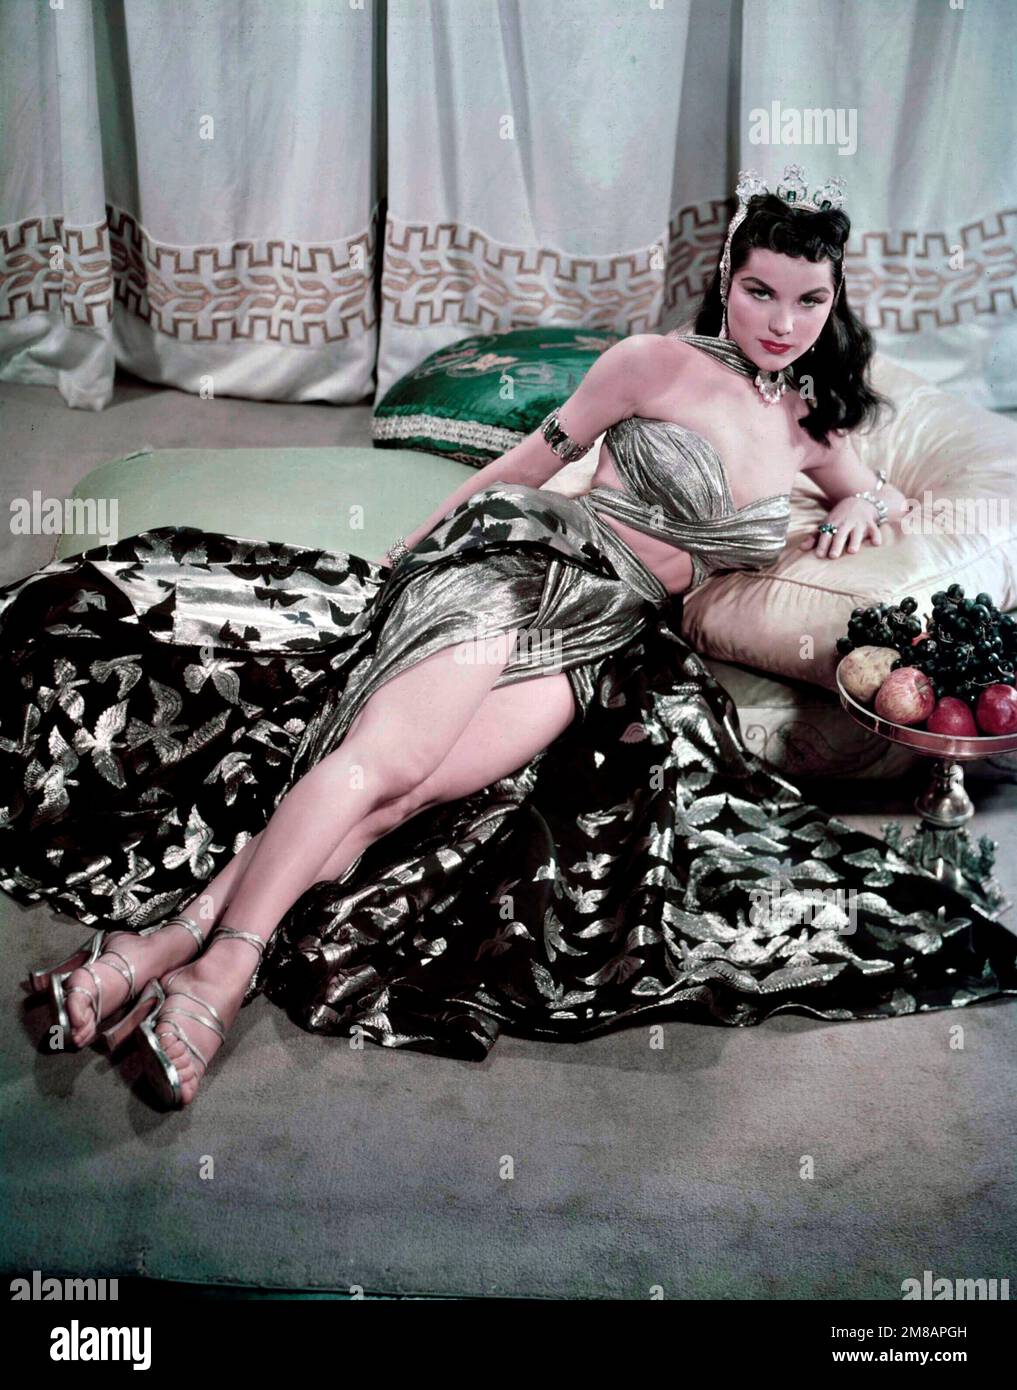 DEBRA PAGET in PRINCESS OF THE NILE (1954), directed by HARMON JONES. Credit: 20TH CENTURY FOX / Album Stock Photo